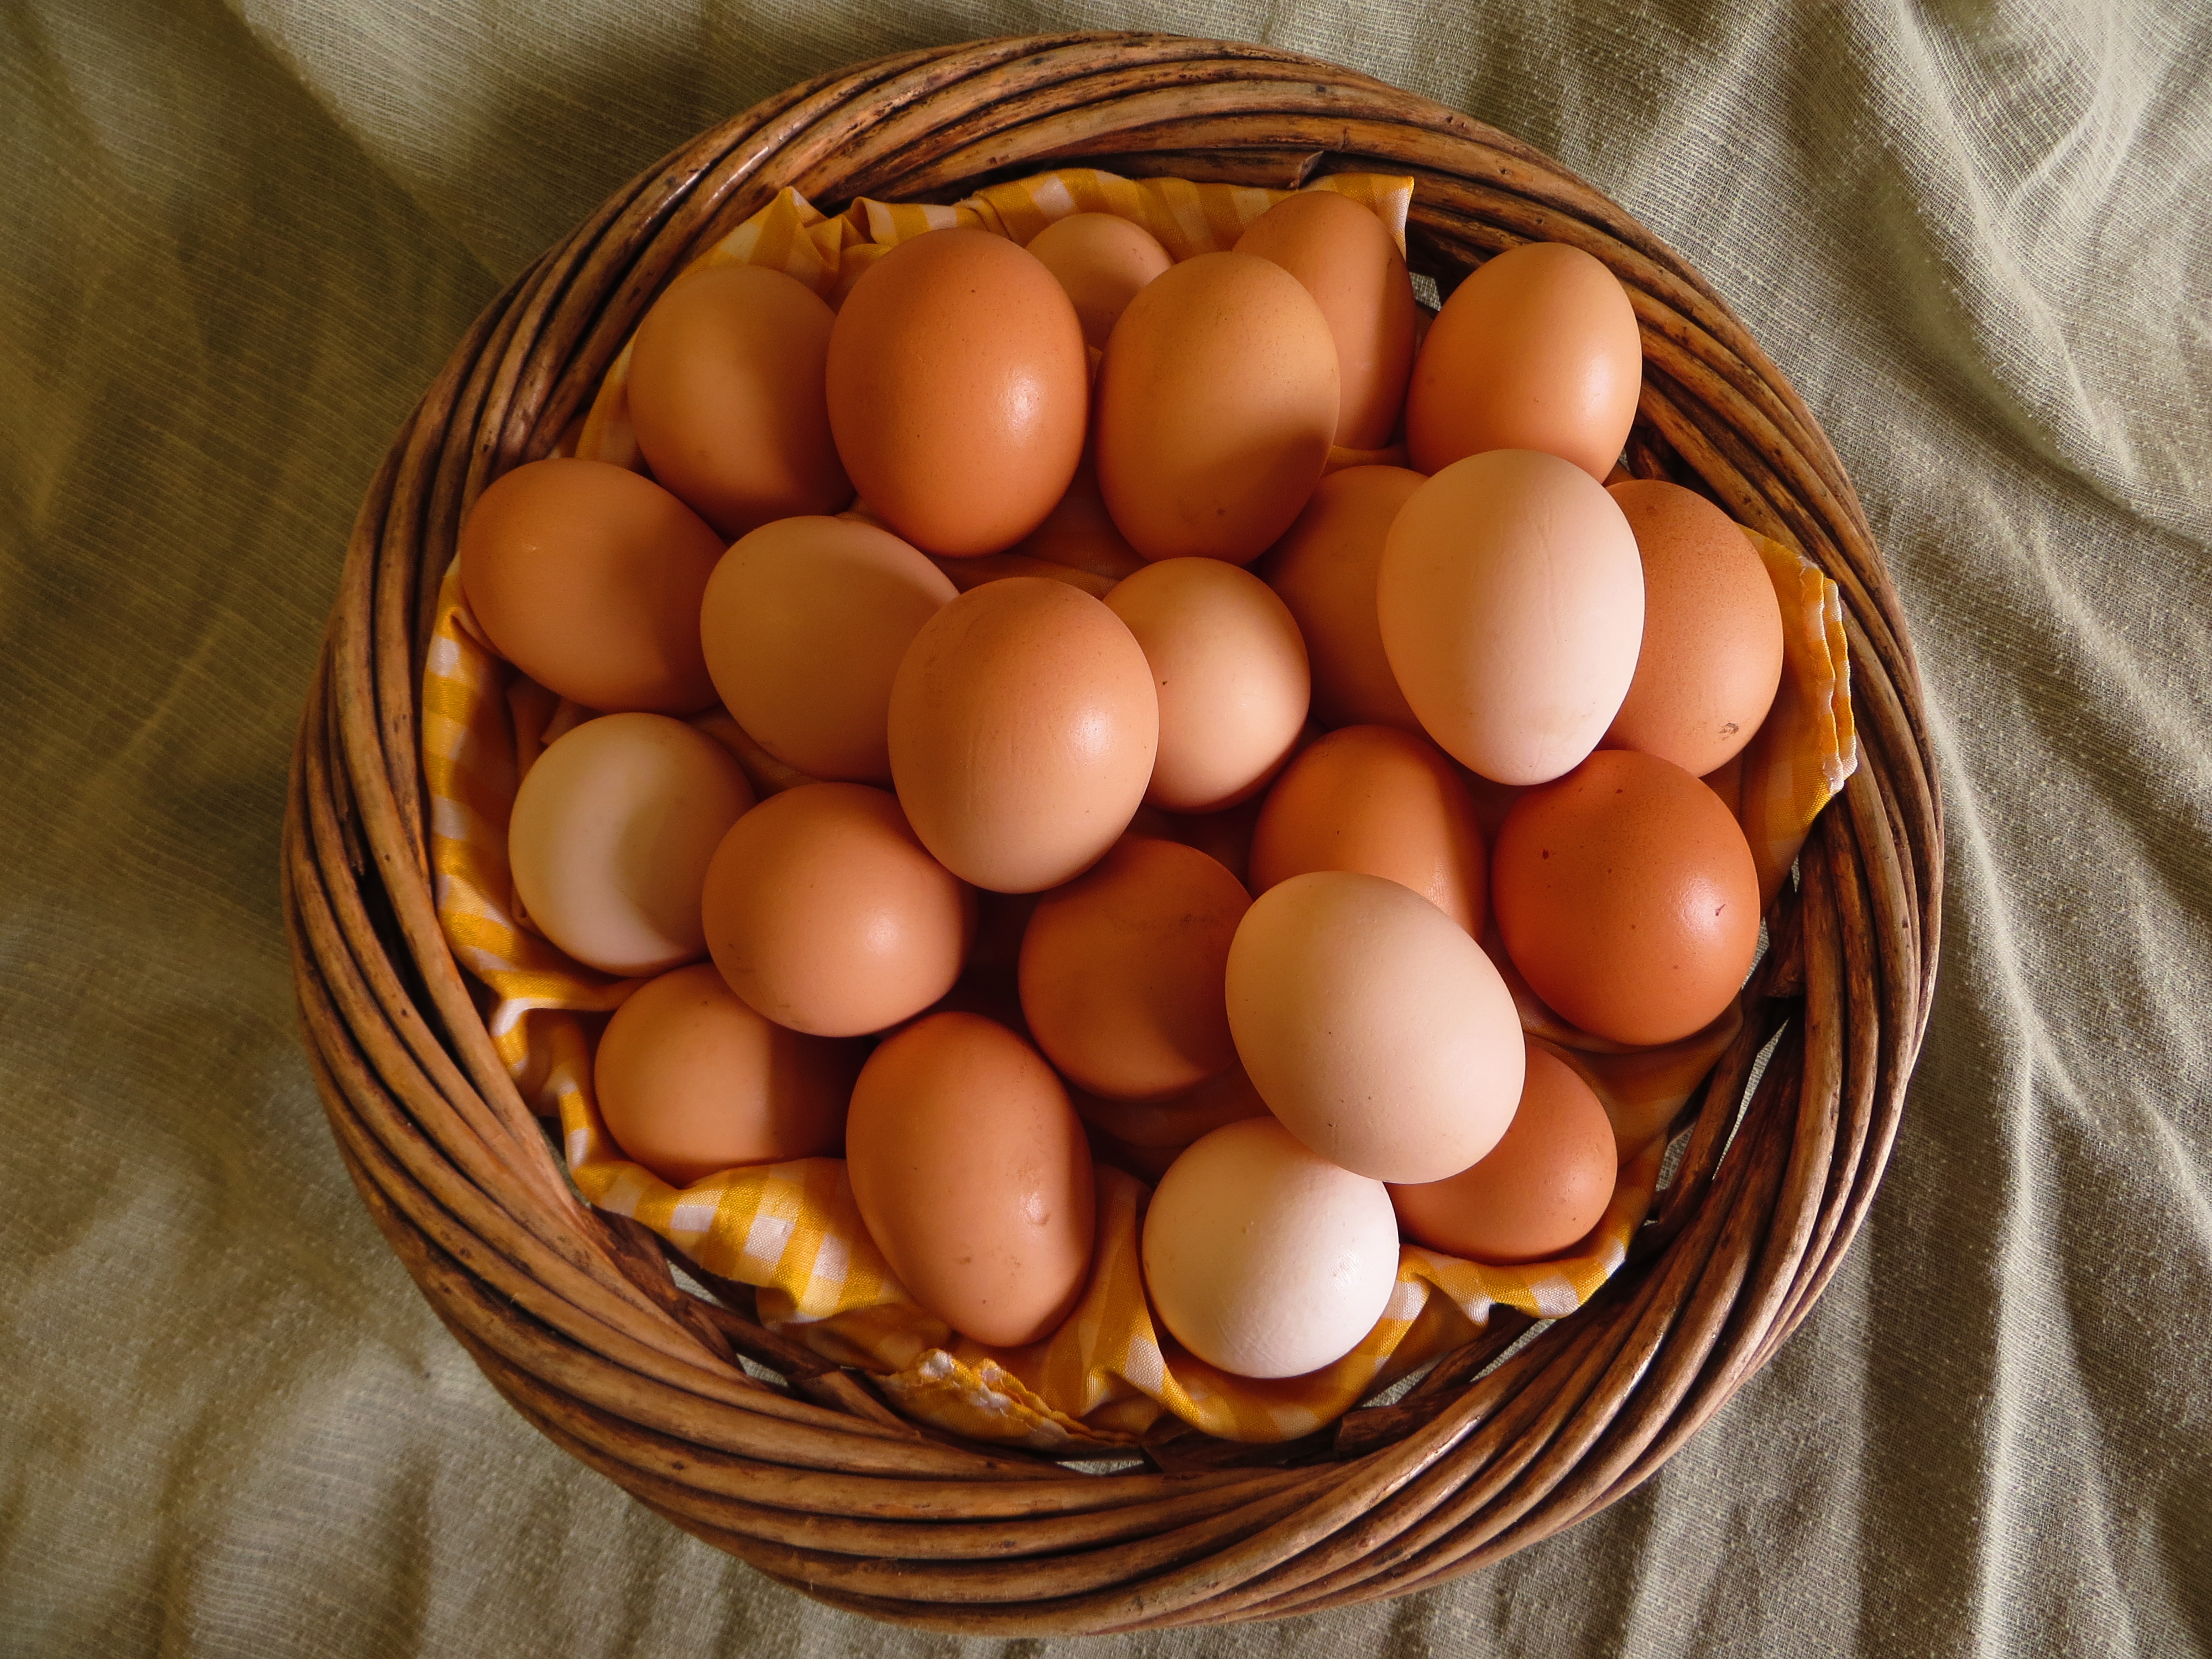 Nash's eggs in a basket